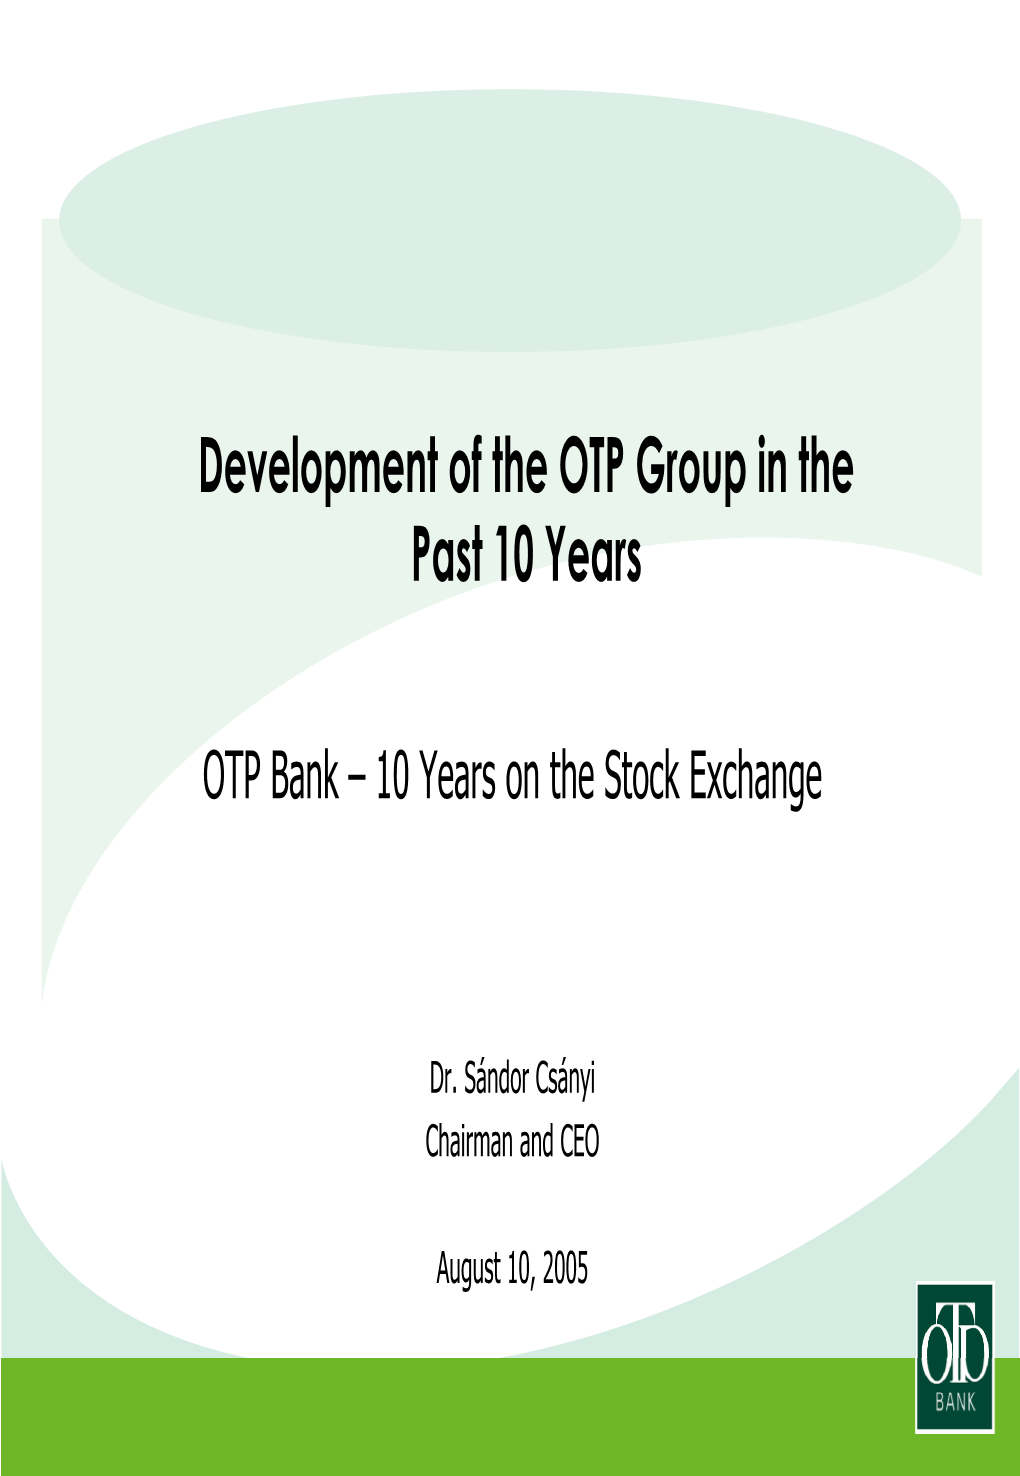 OTP Bank – 10 Years on the Stock Exchange